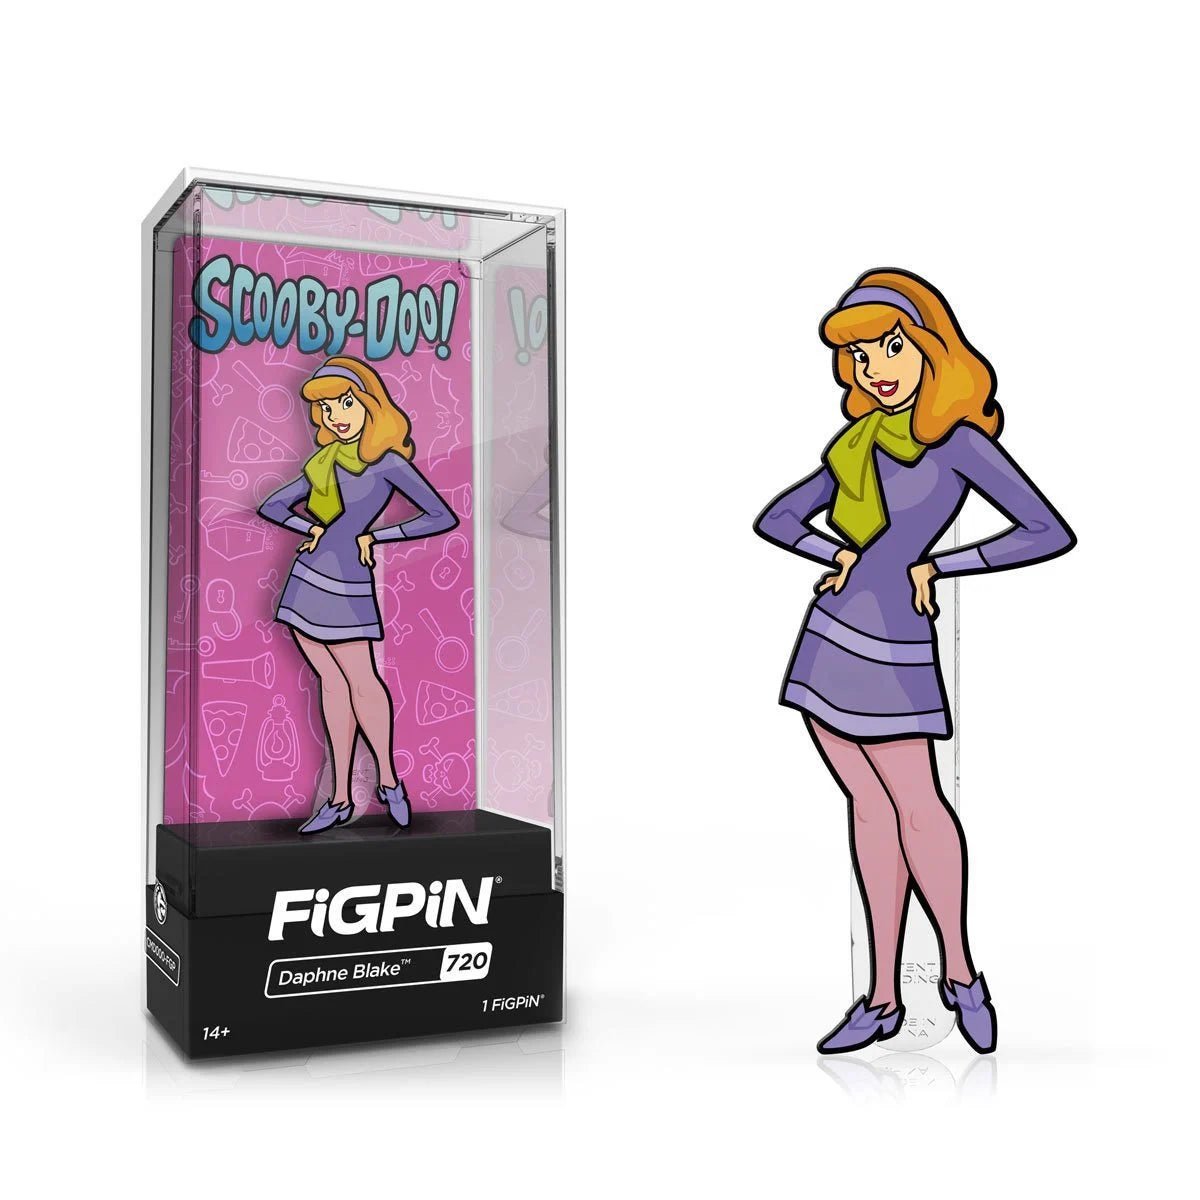 Scooby-Doo Daphne Blake FiGPiN Classic 3-Inch Enamel Pin #720 - Simon's Collectibles